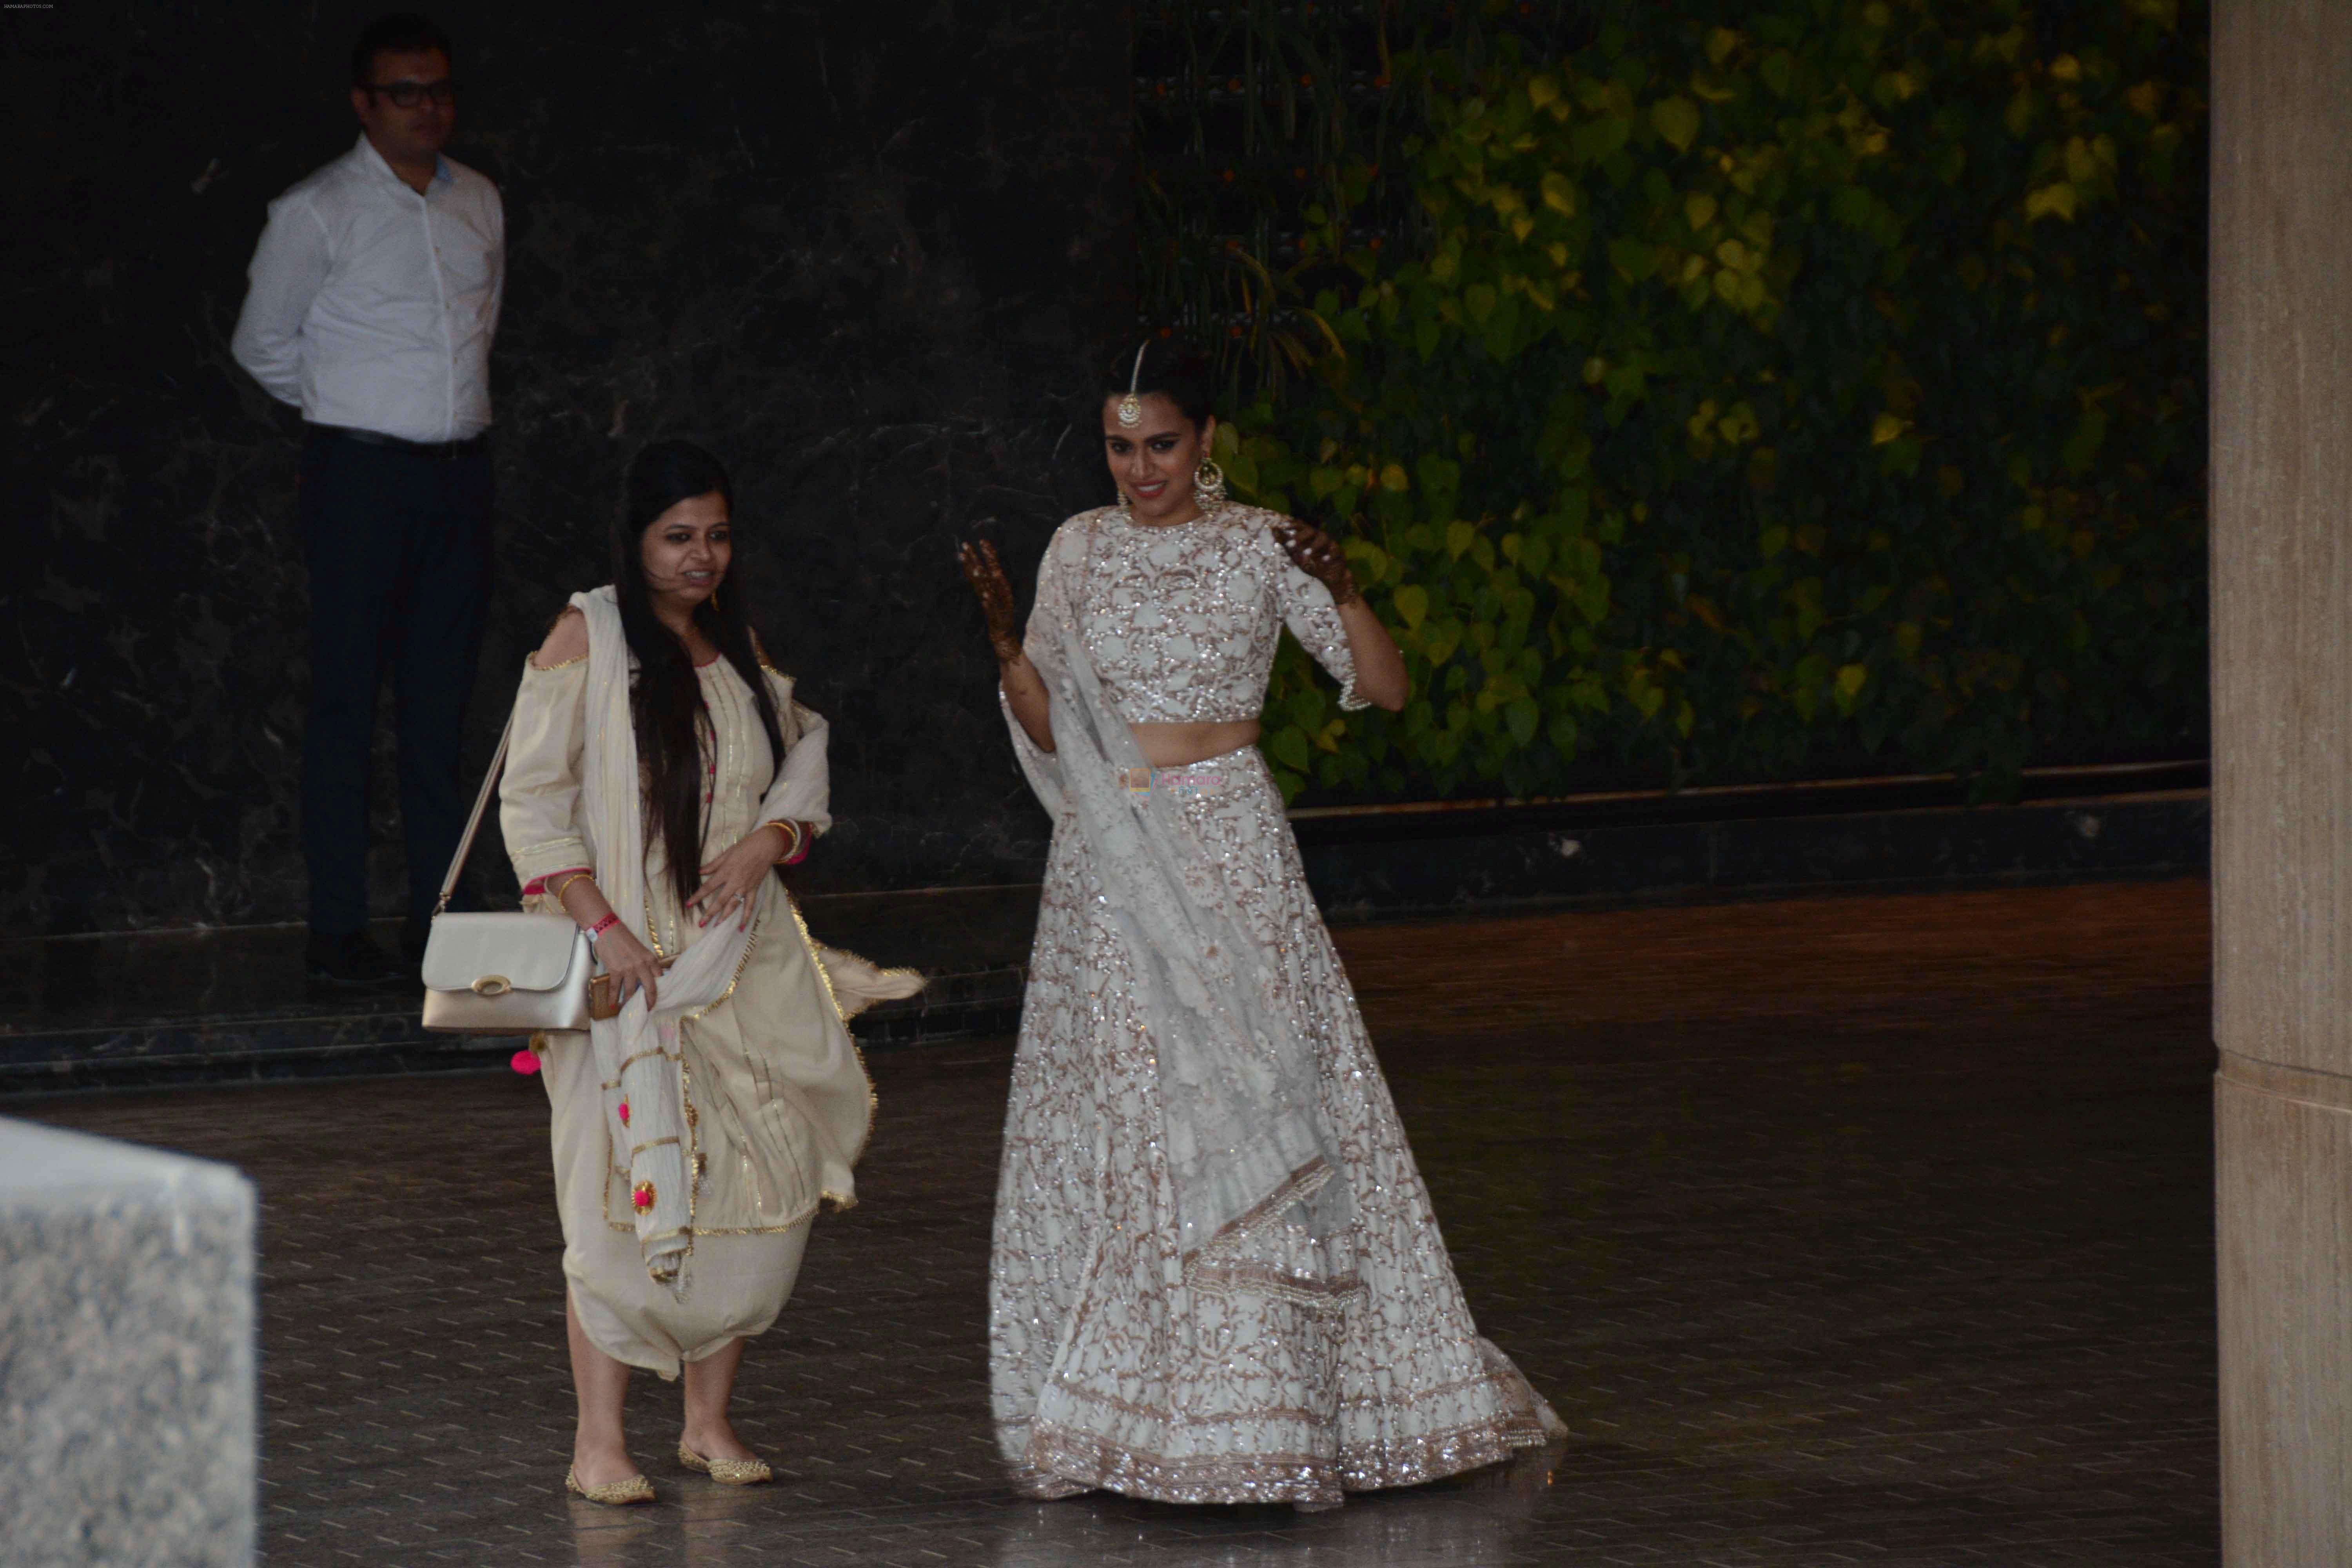 Swara Bhaskar at Sonam Kapoor's Sangeet n Mehndi at bkc in mumbai on 7th May 2018